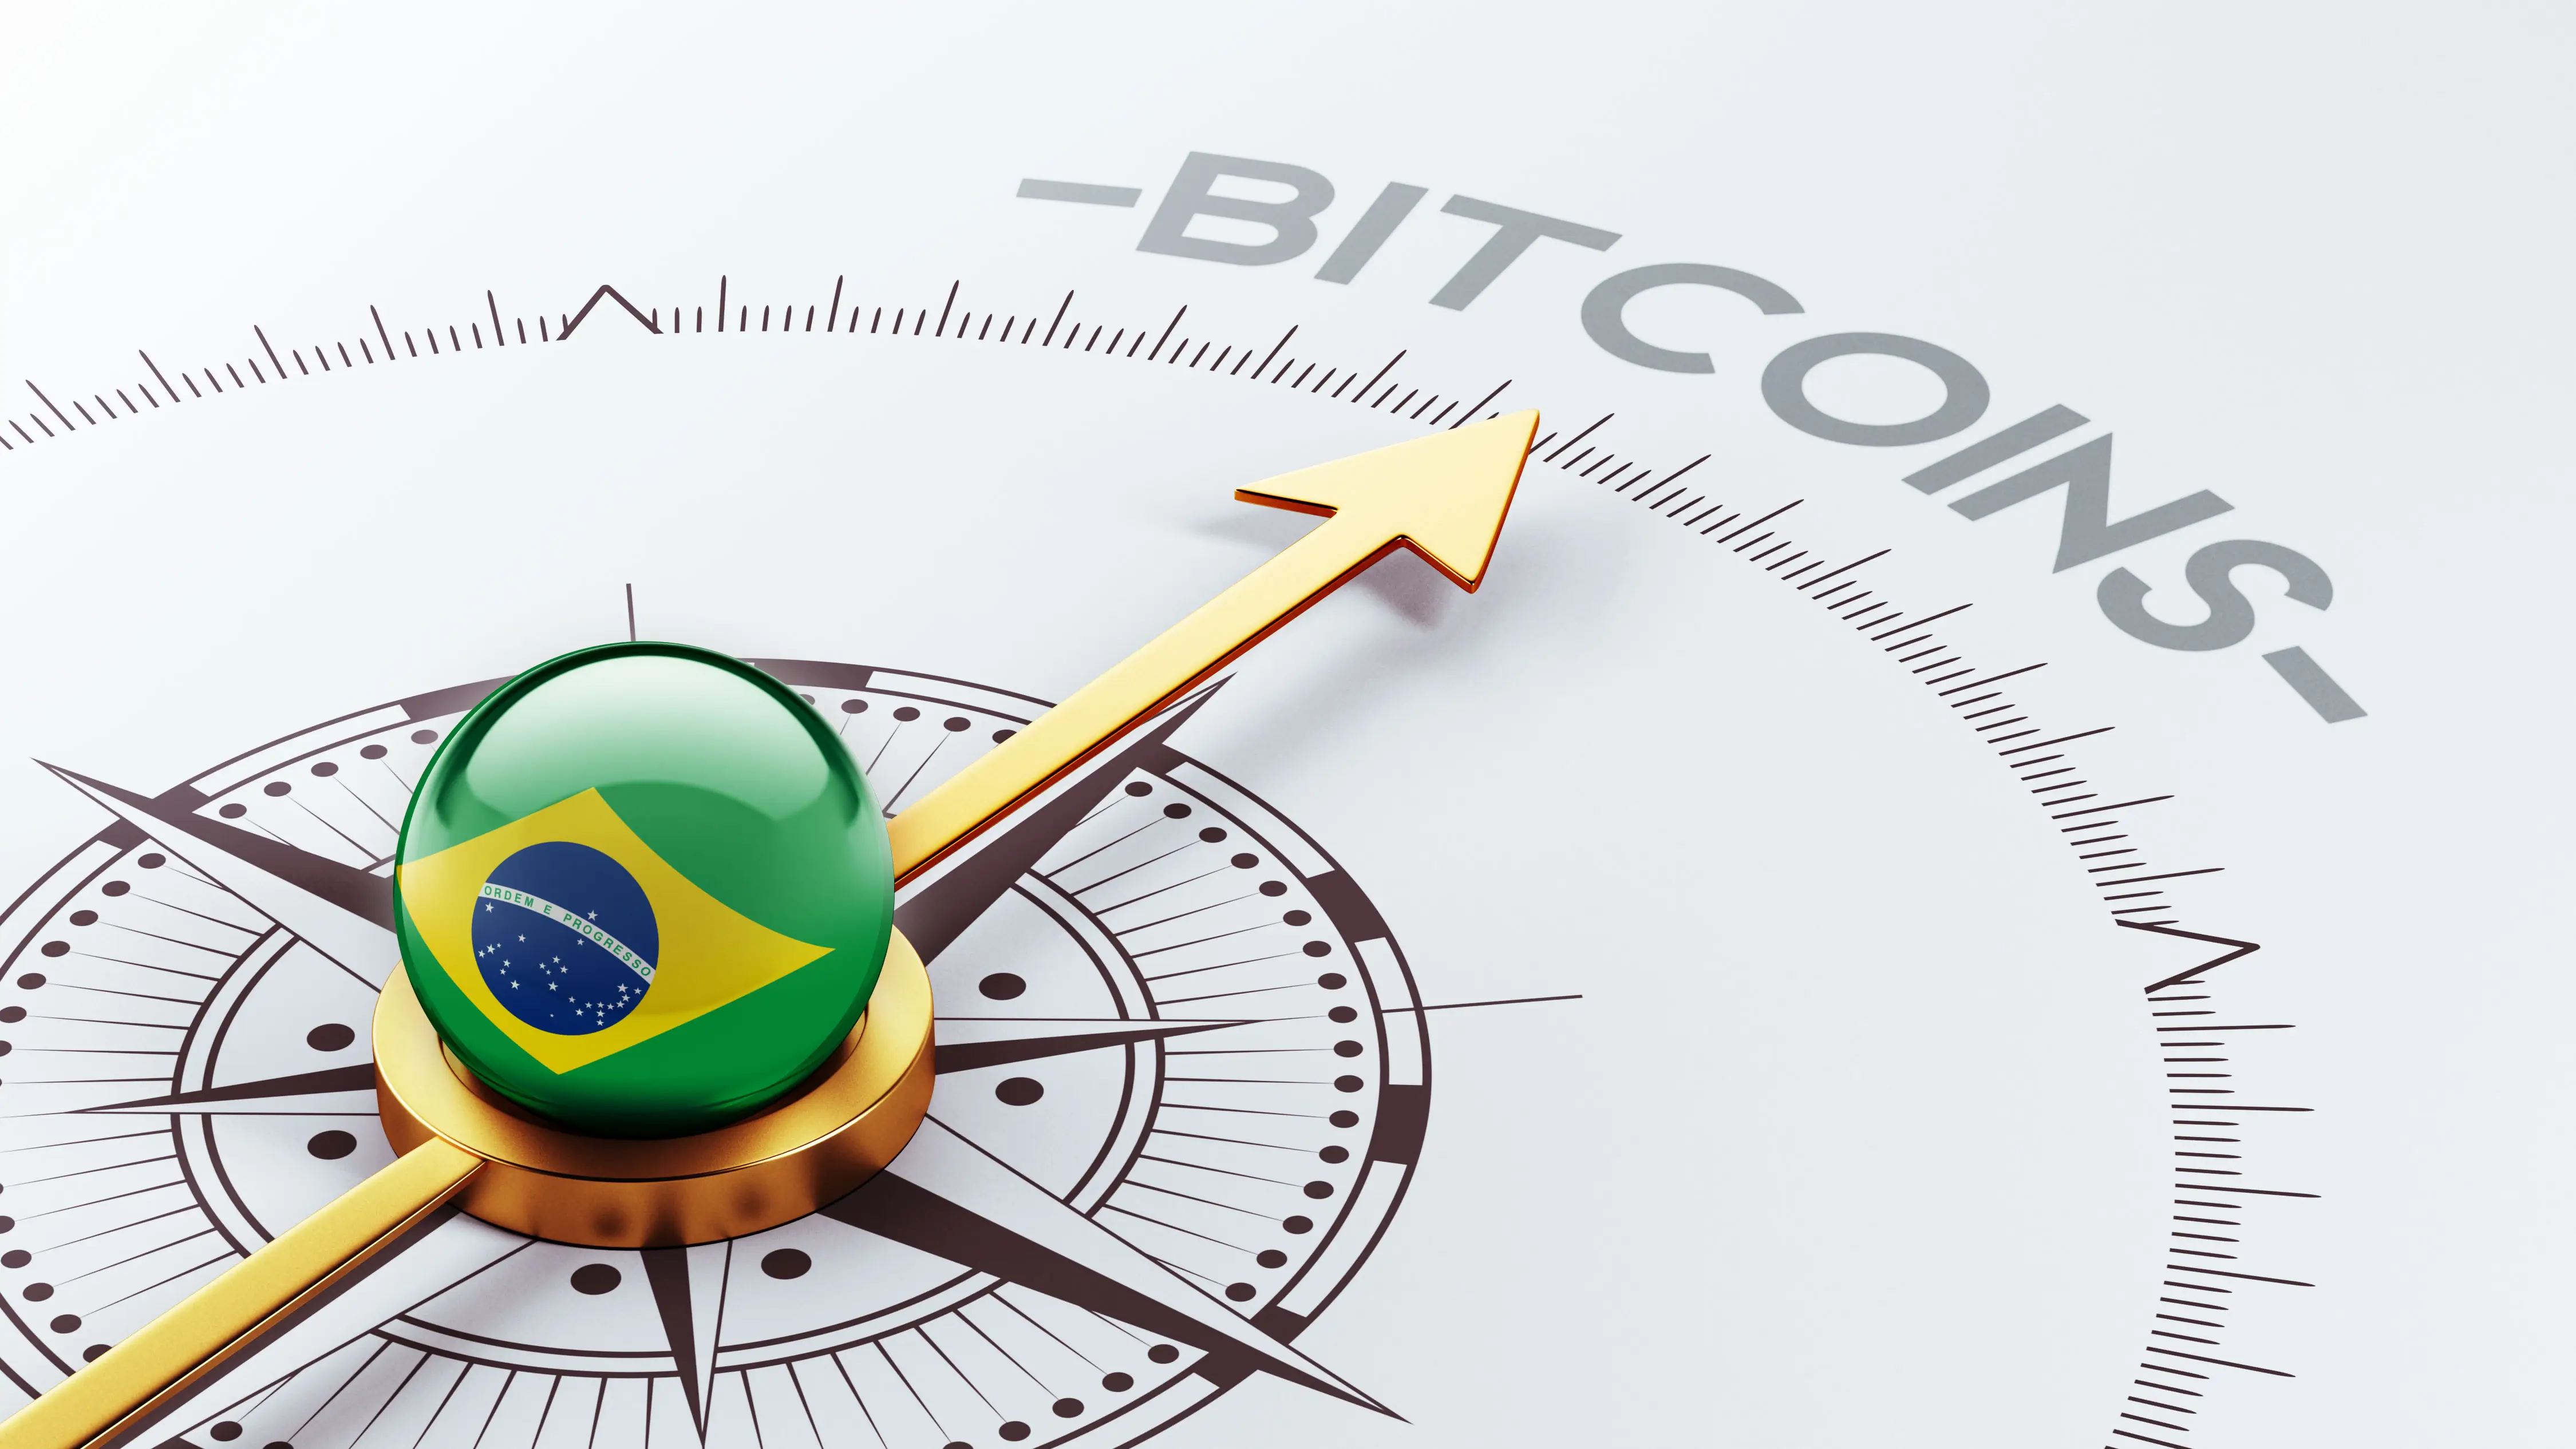 Brazil High Resolution Bitcoin Concept